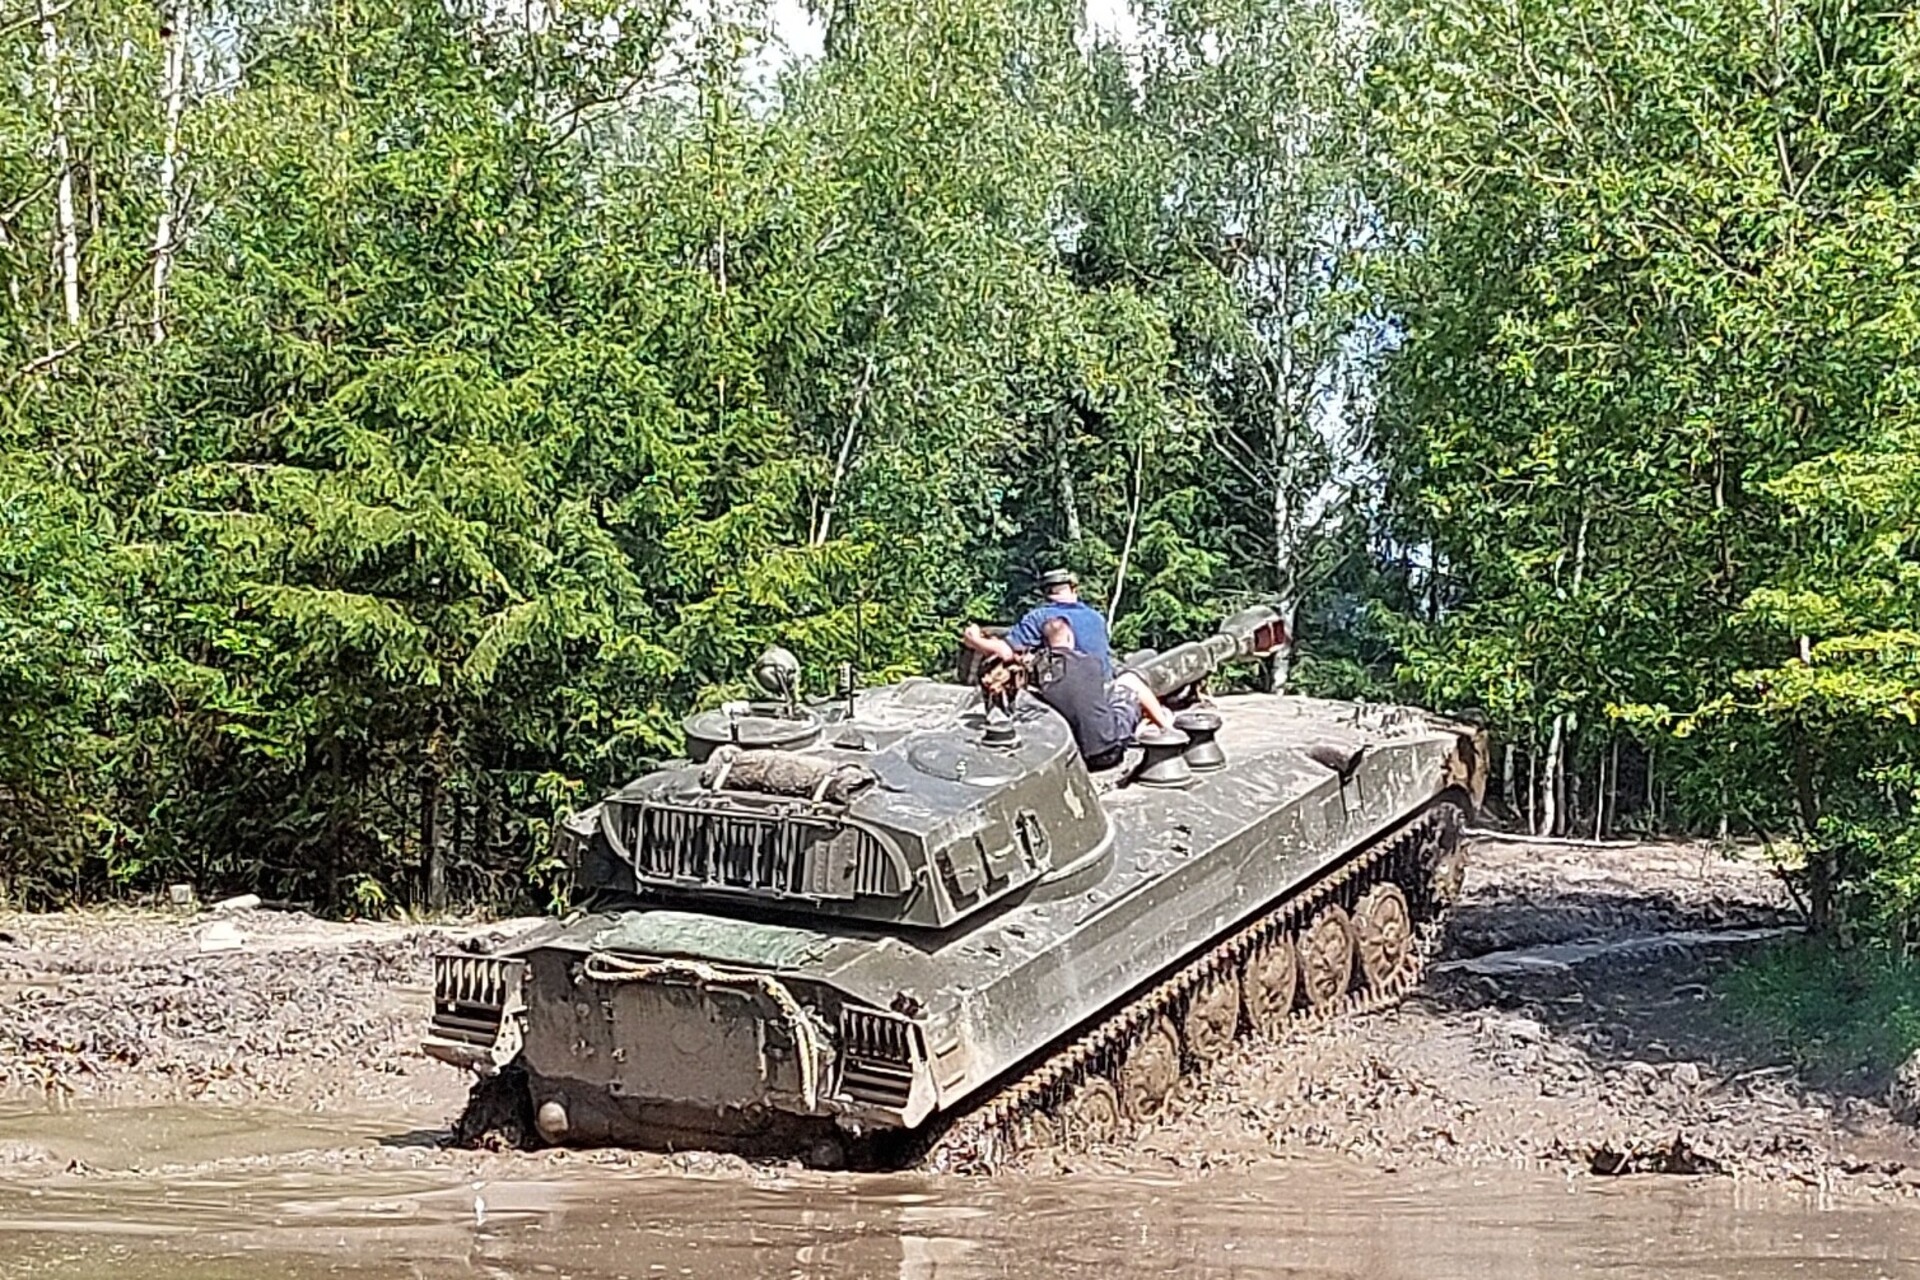 2S1-Panzerhaubitze-122 mm fahren